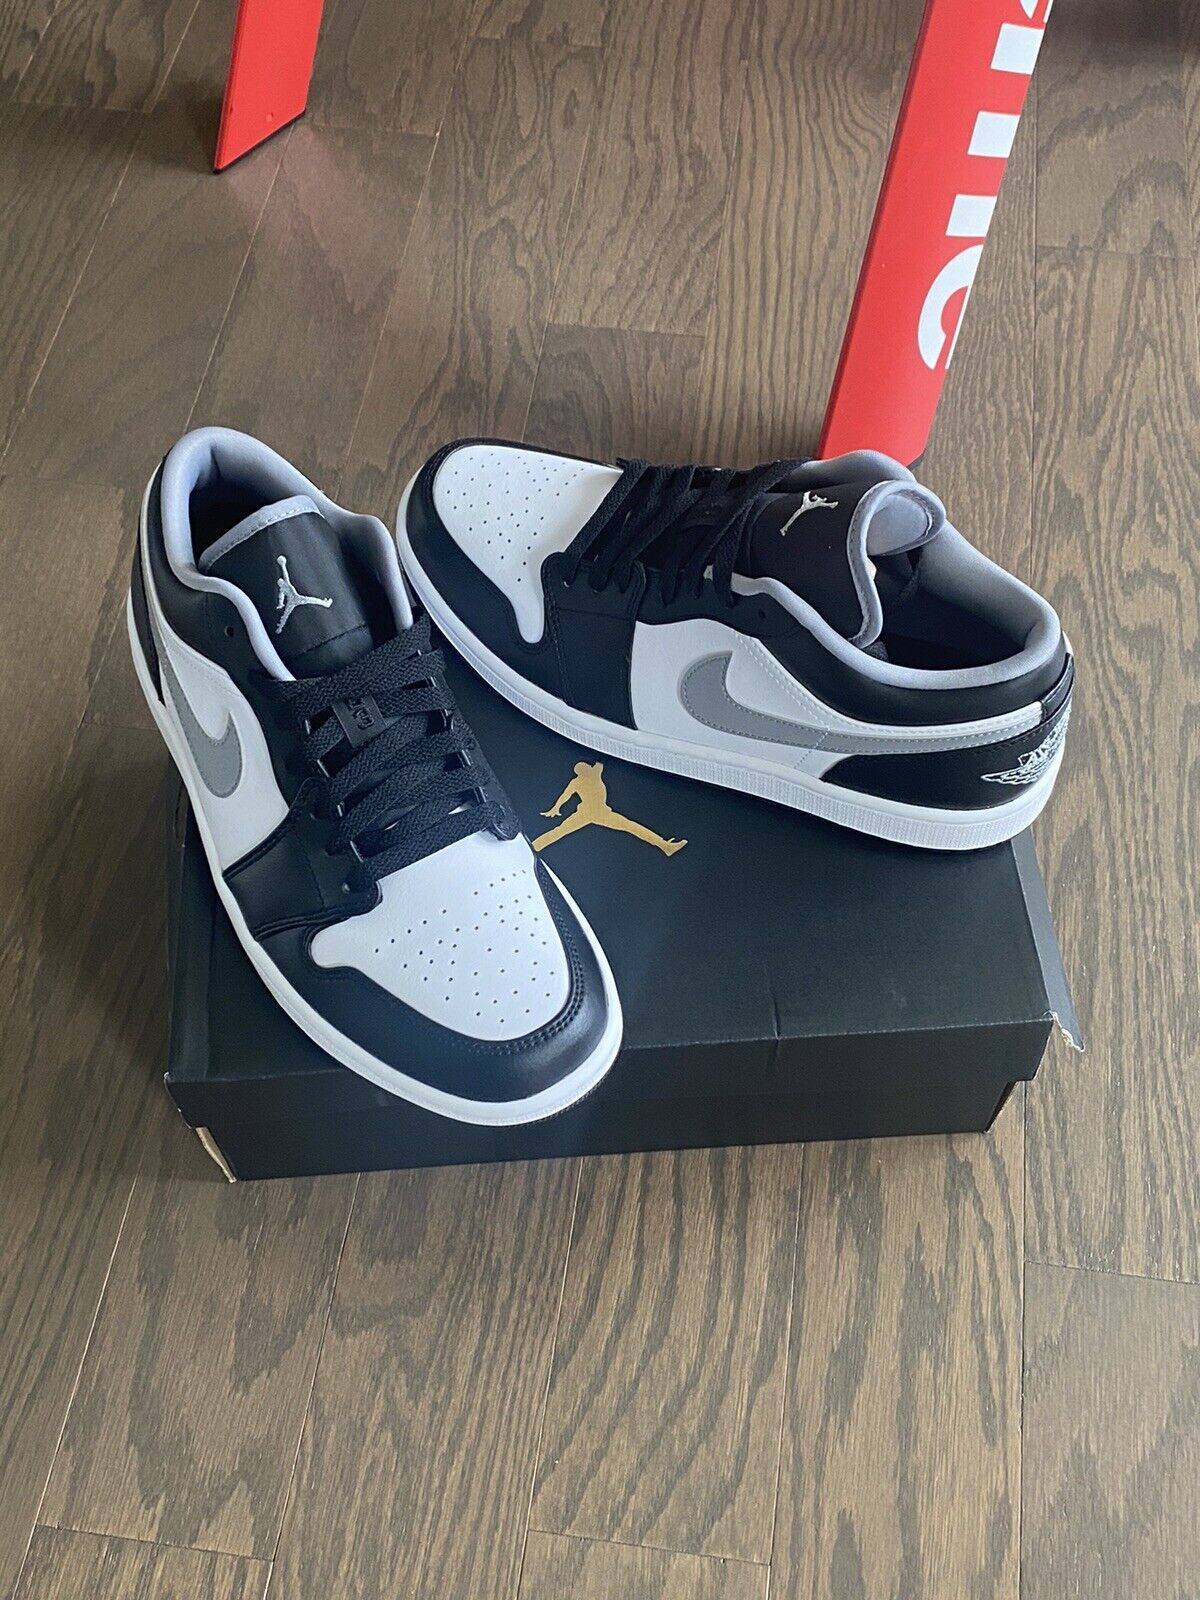 Air Jordan 1 Low Black White Grey Nike 553558-040